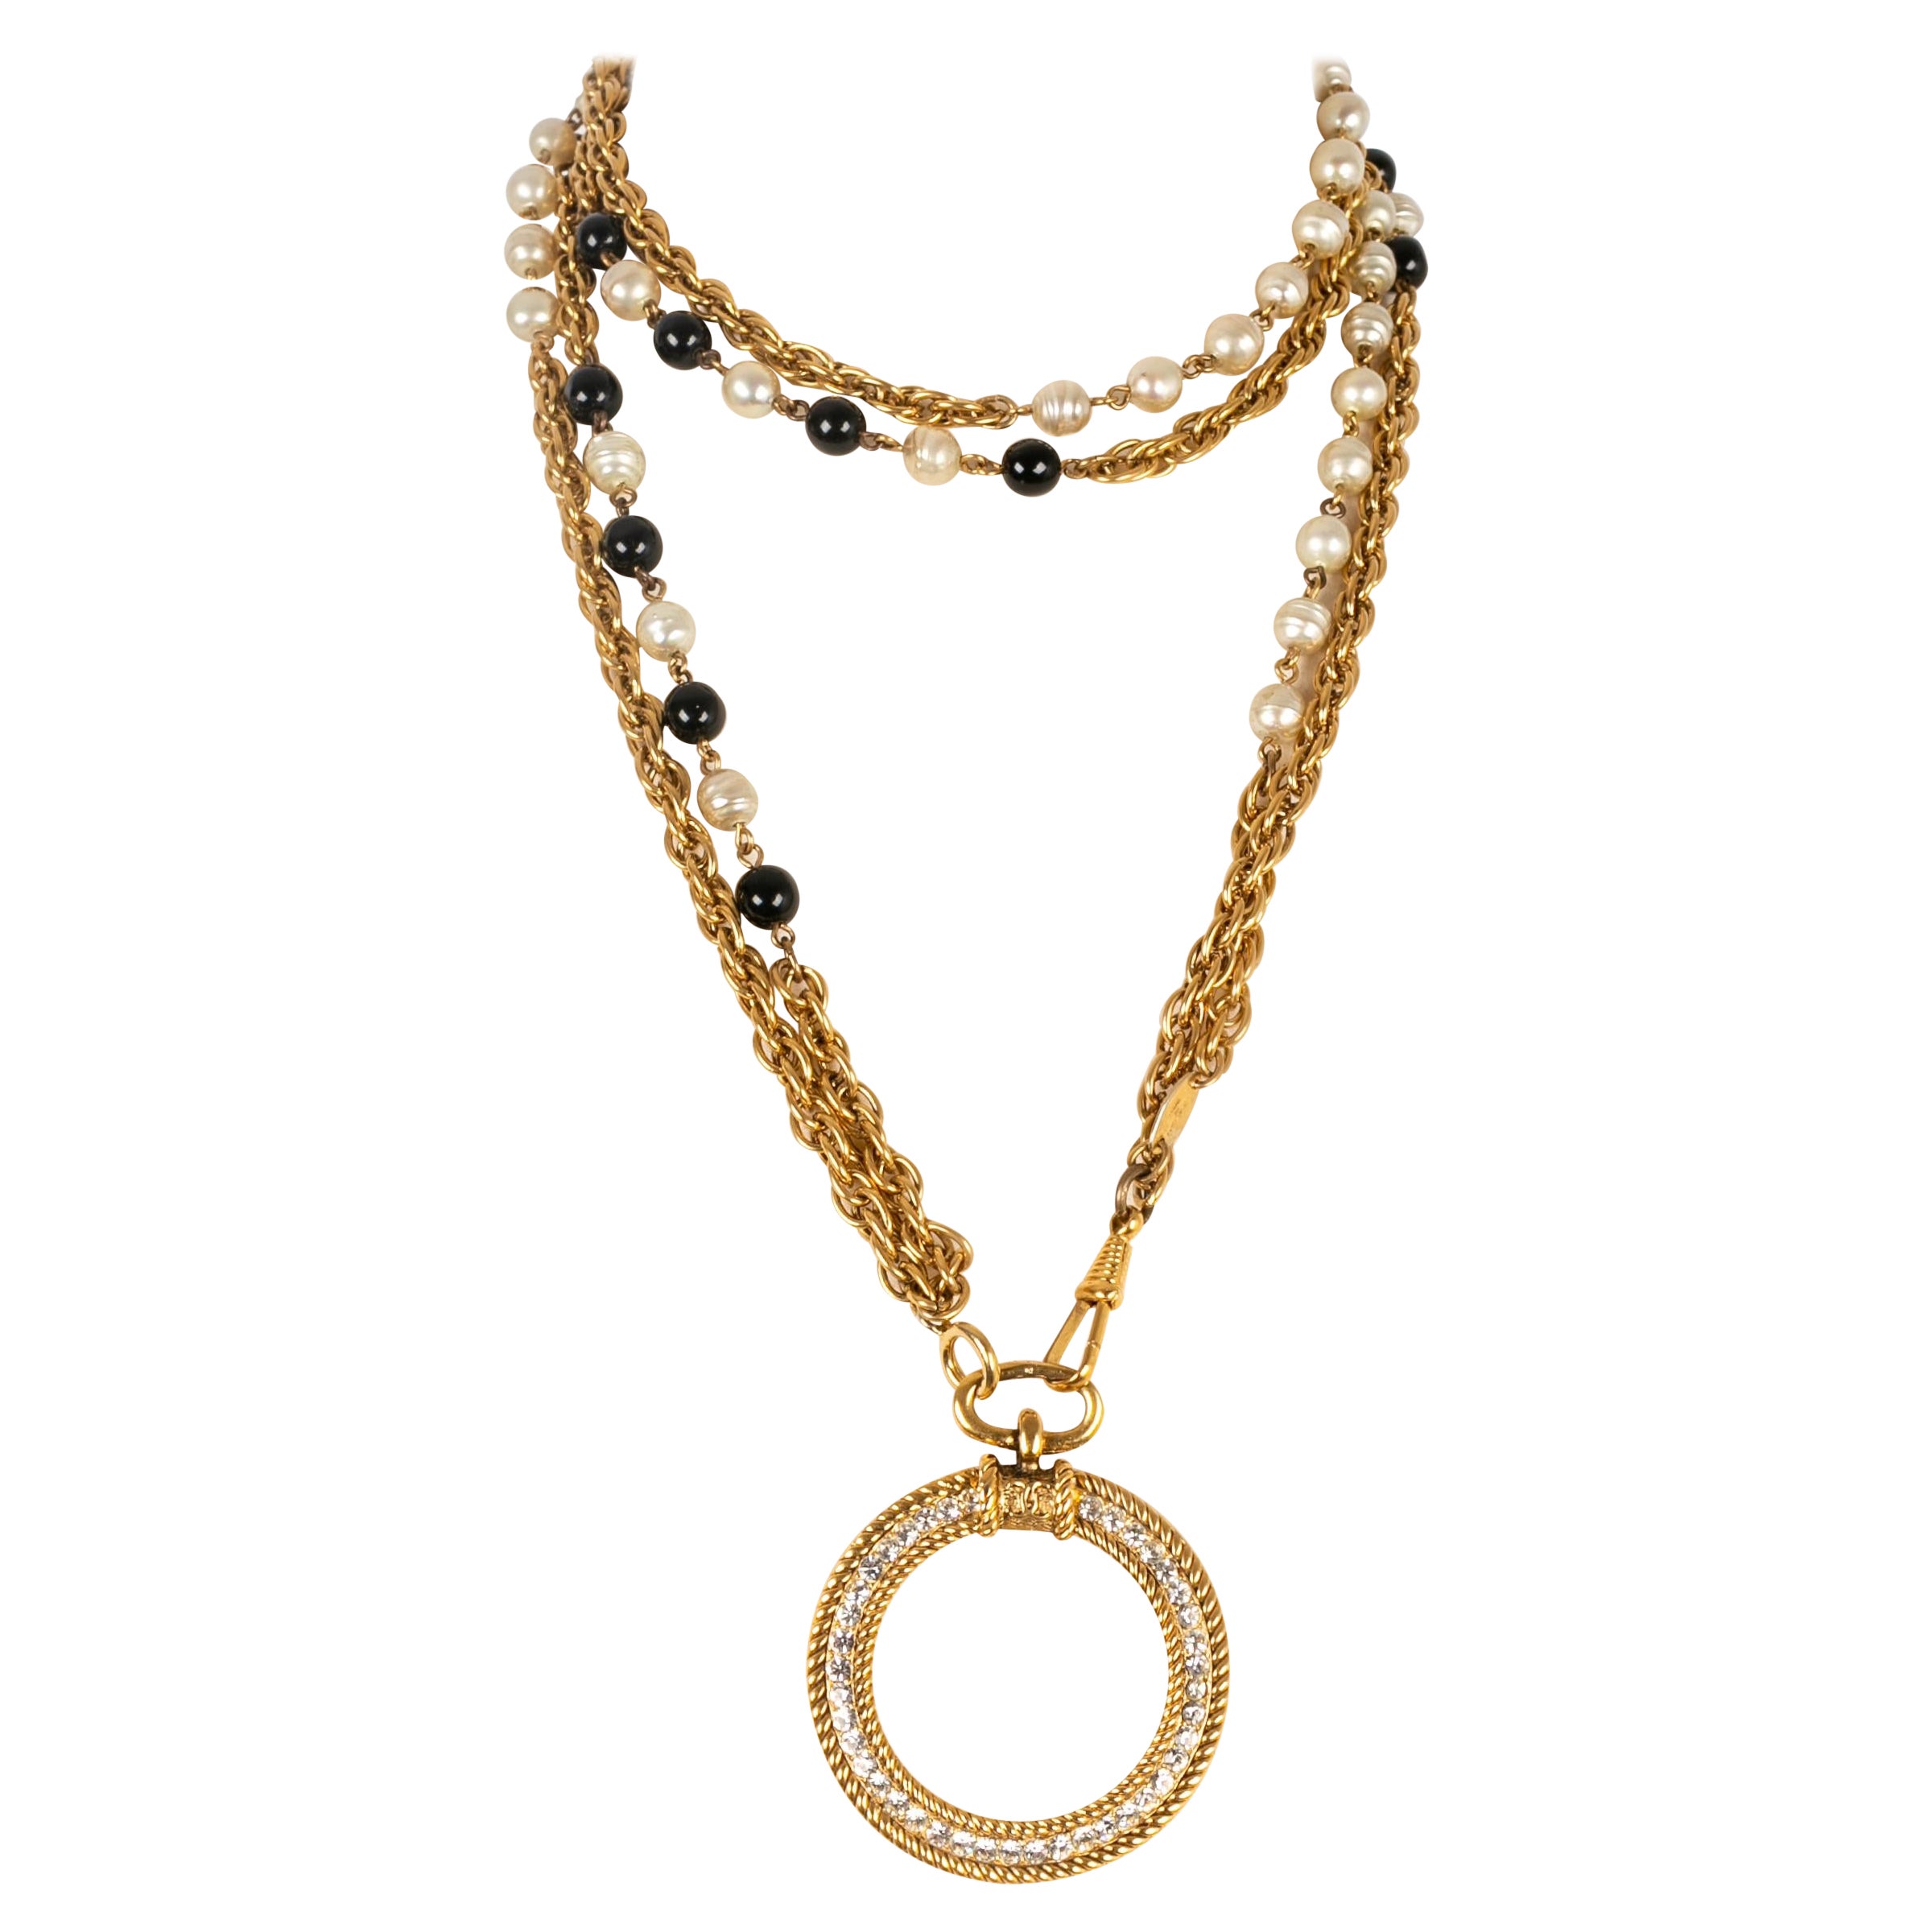 Chanel long pendant necklace 1985